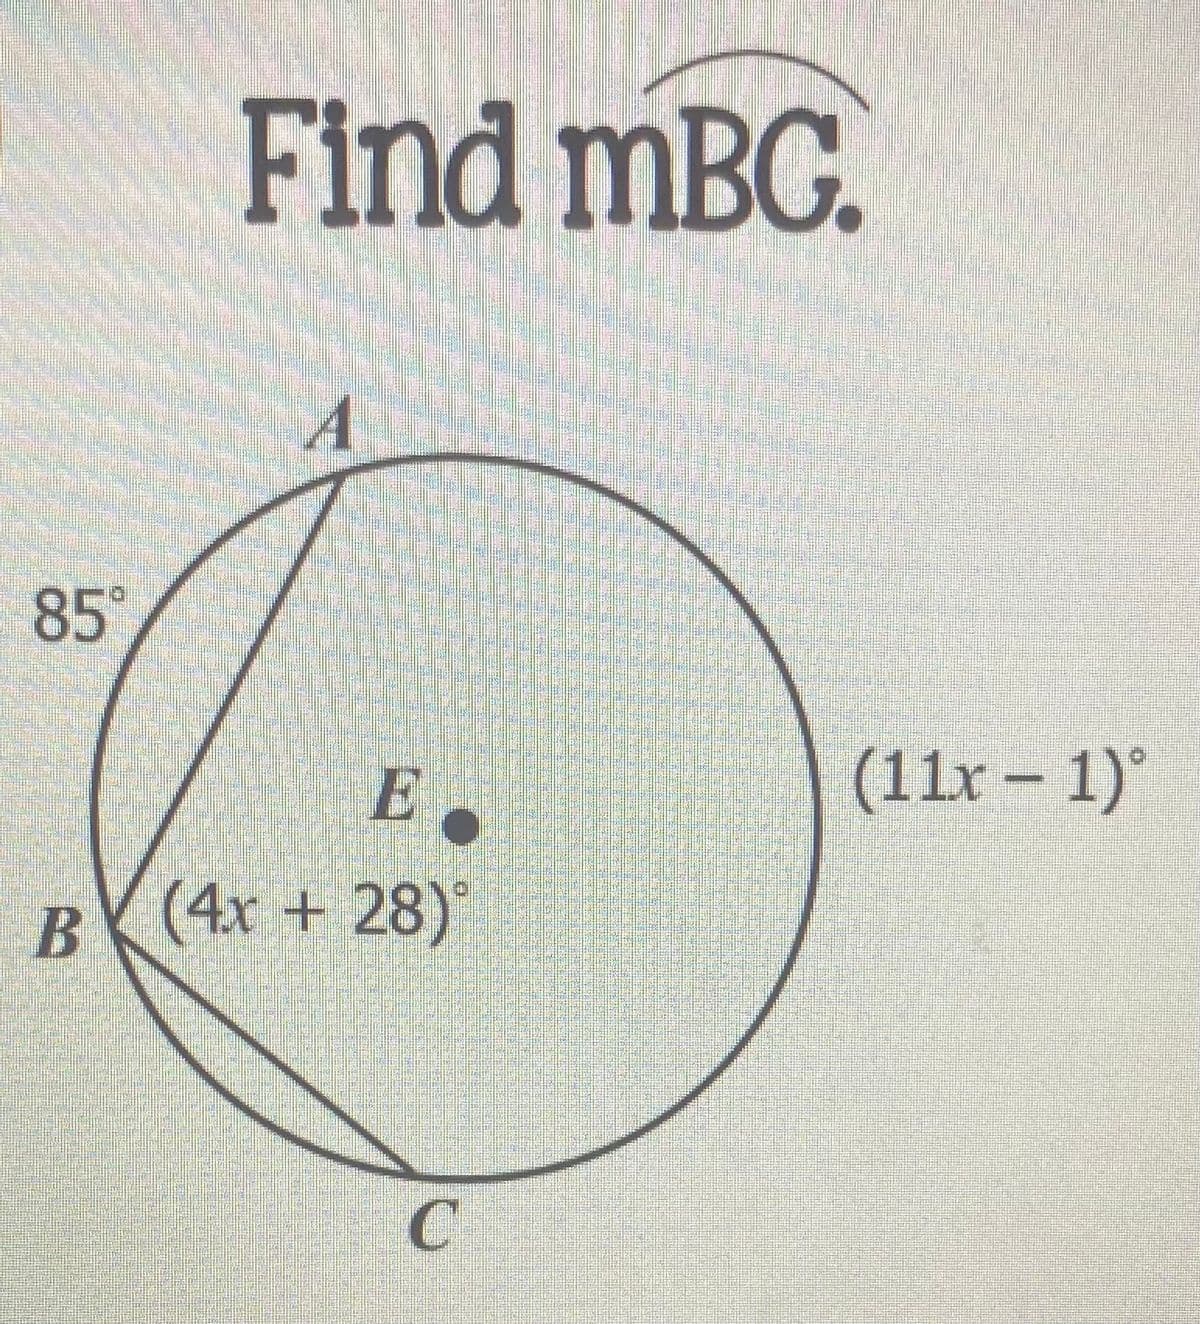 Find mBG.
A
85°
E
(11r – 1)
°
B(4x + 28)
